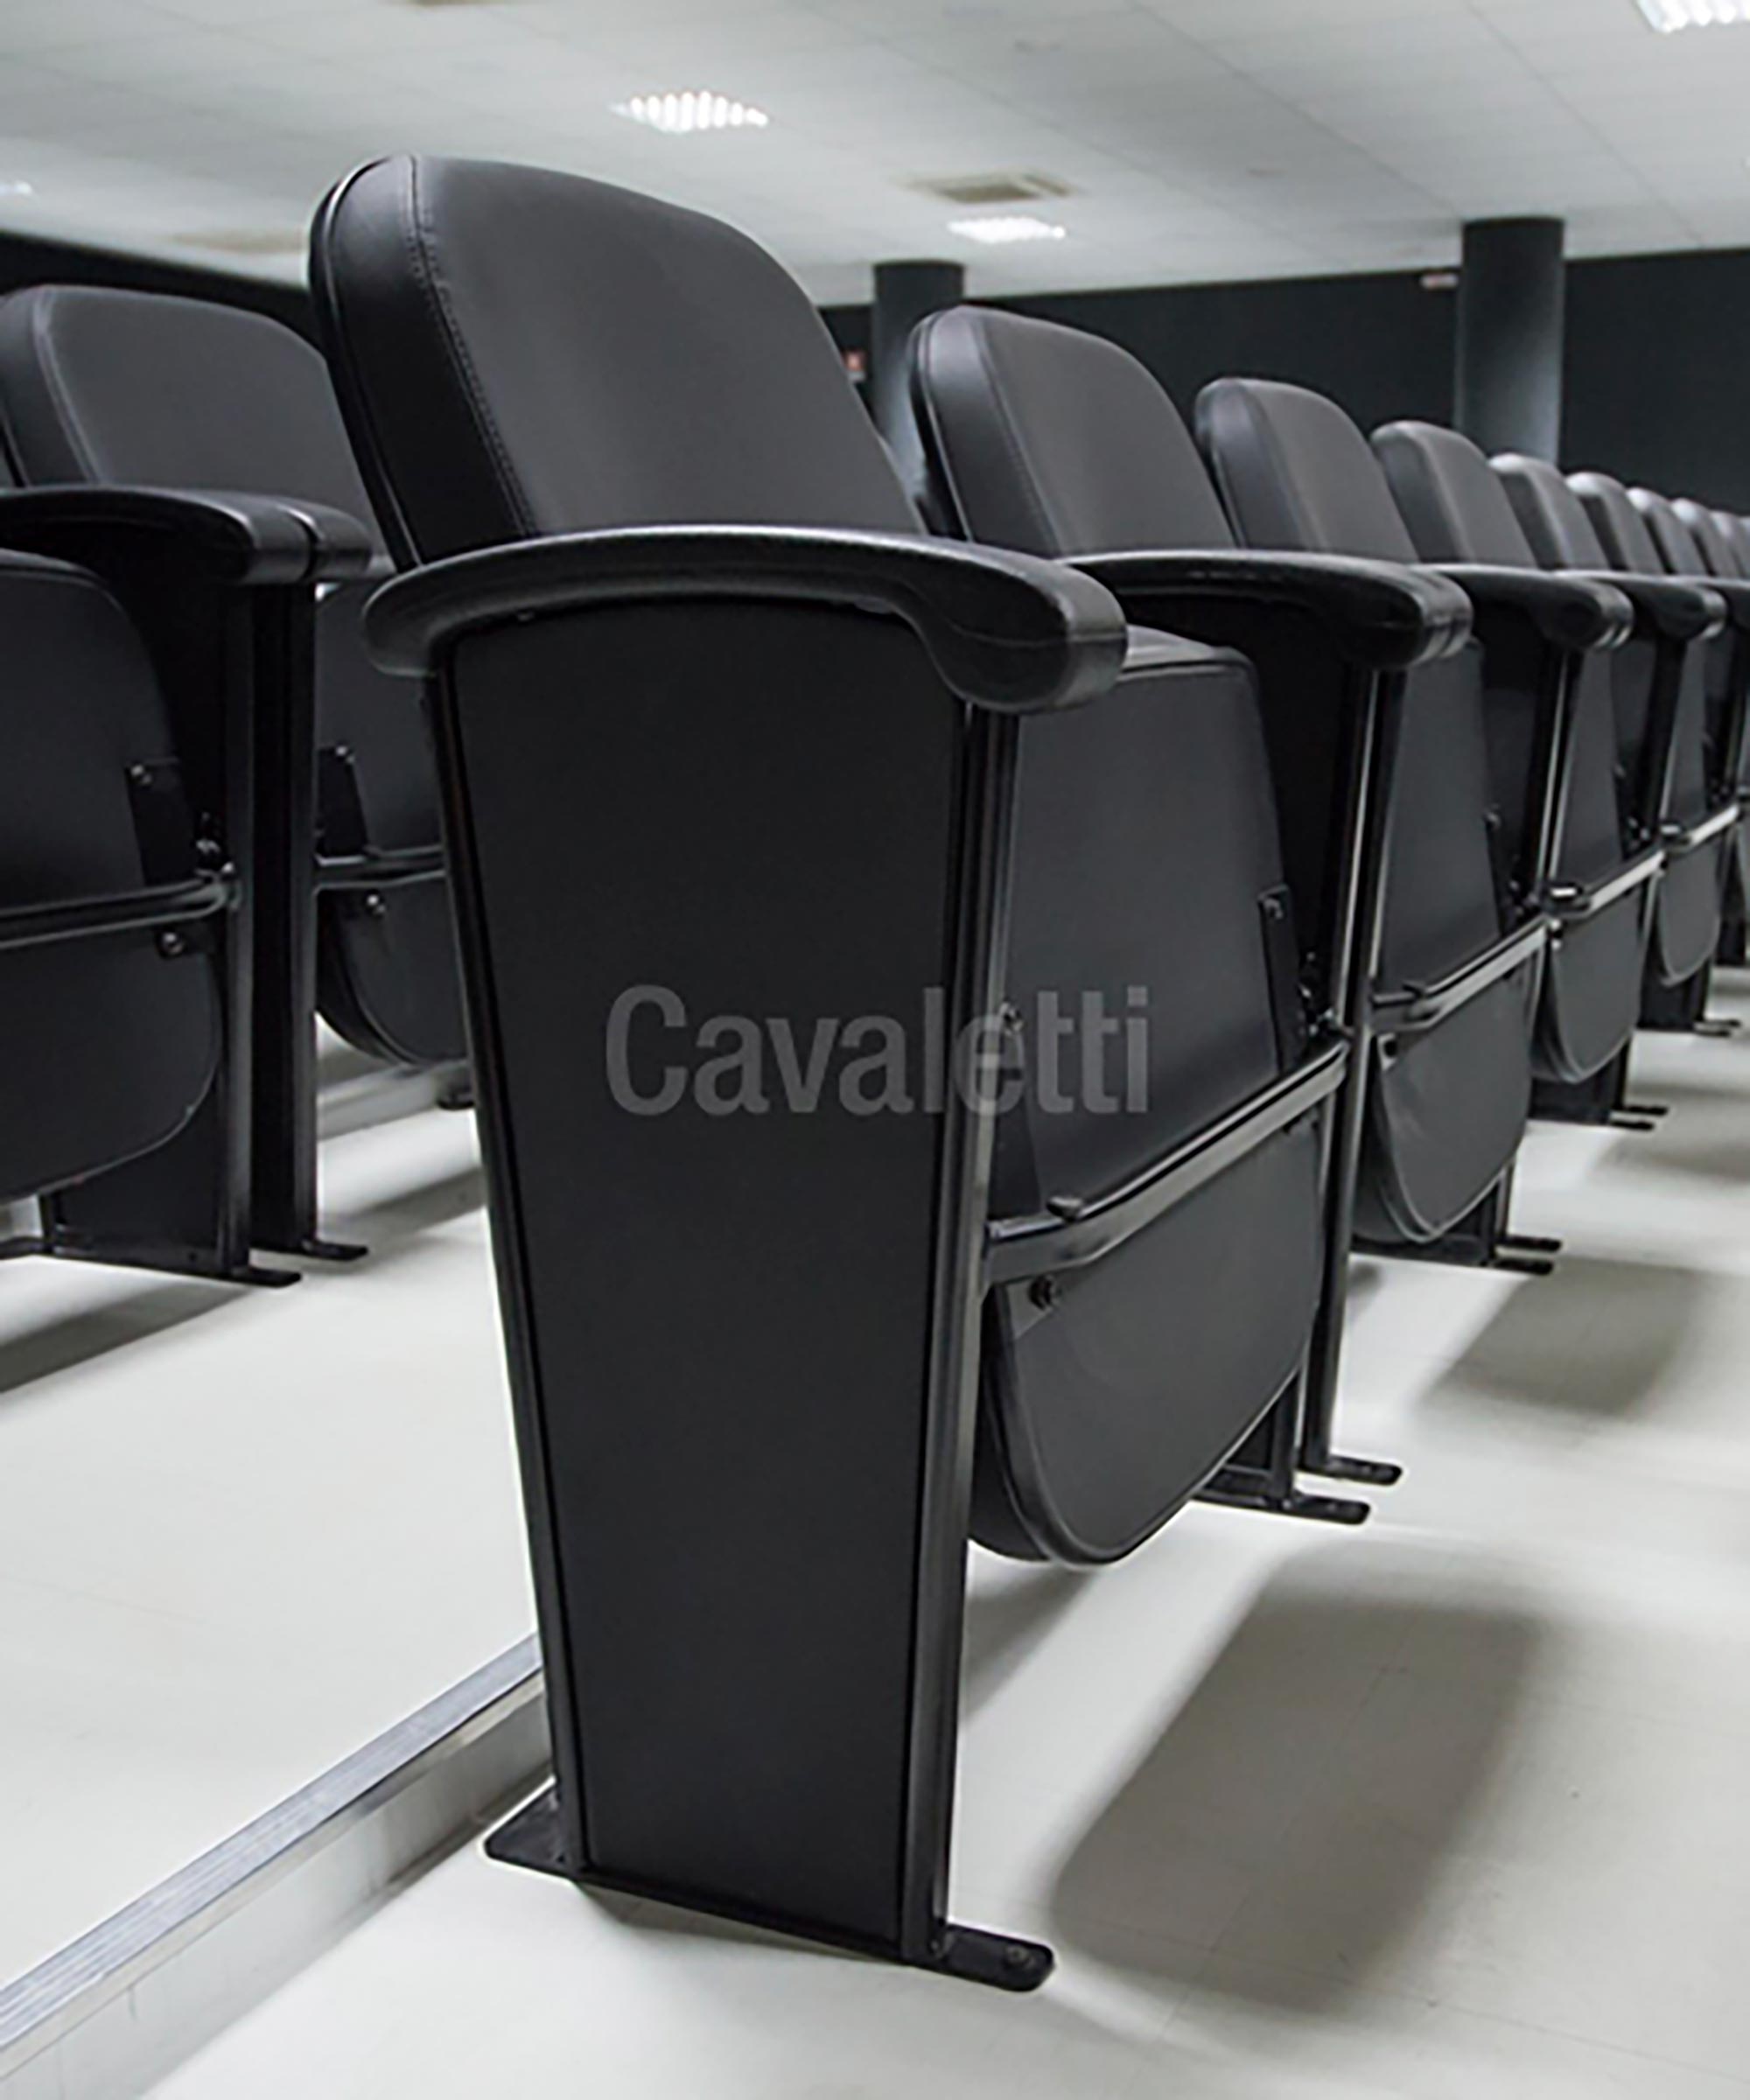 Cathedras_Poltronas-de-auditorio_cavaletti-coletiva-auditorio-p11